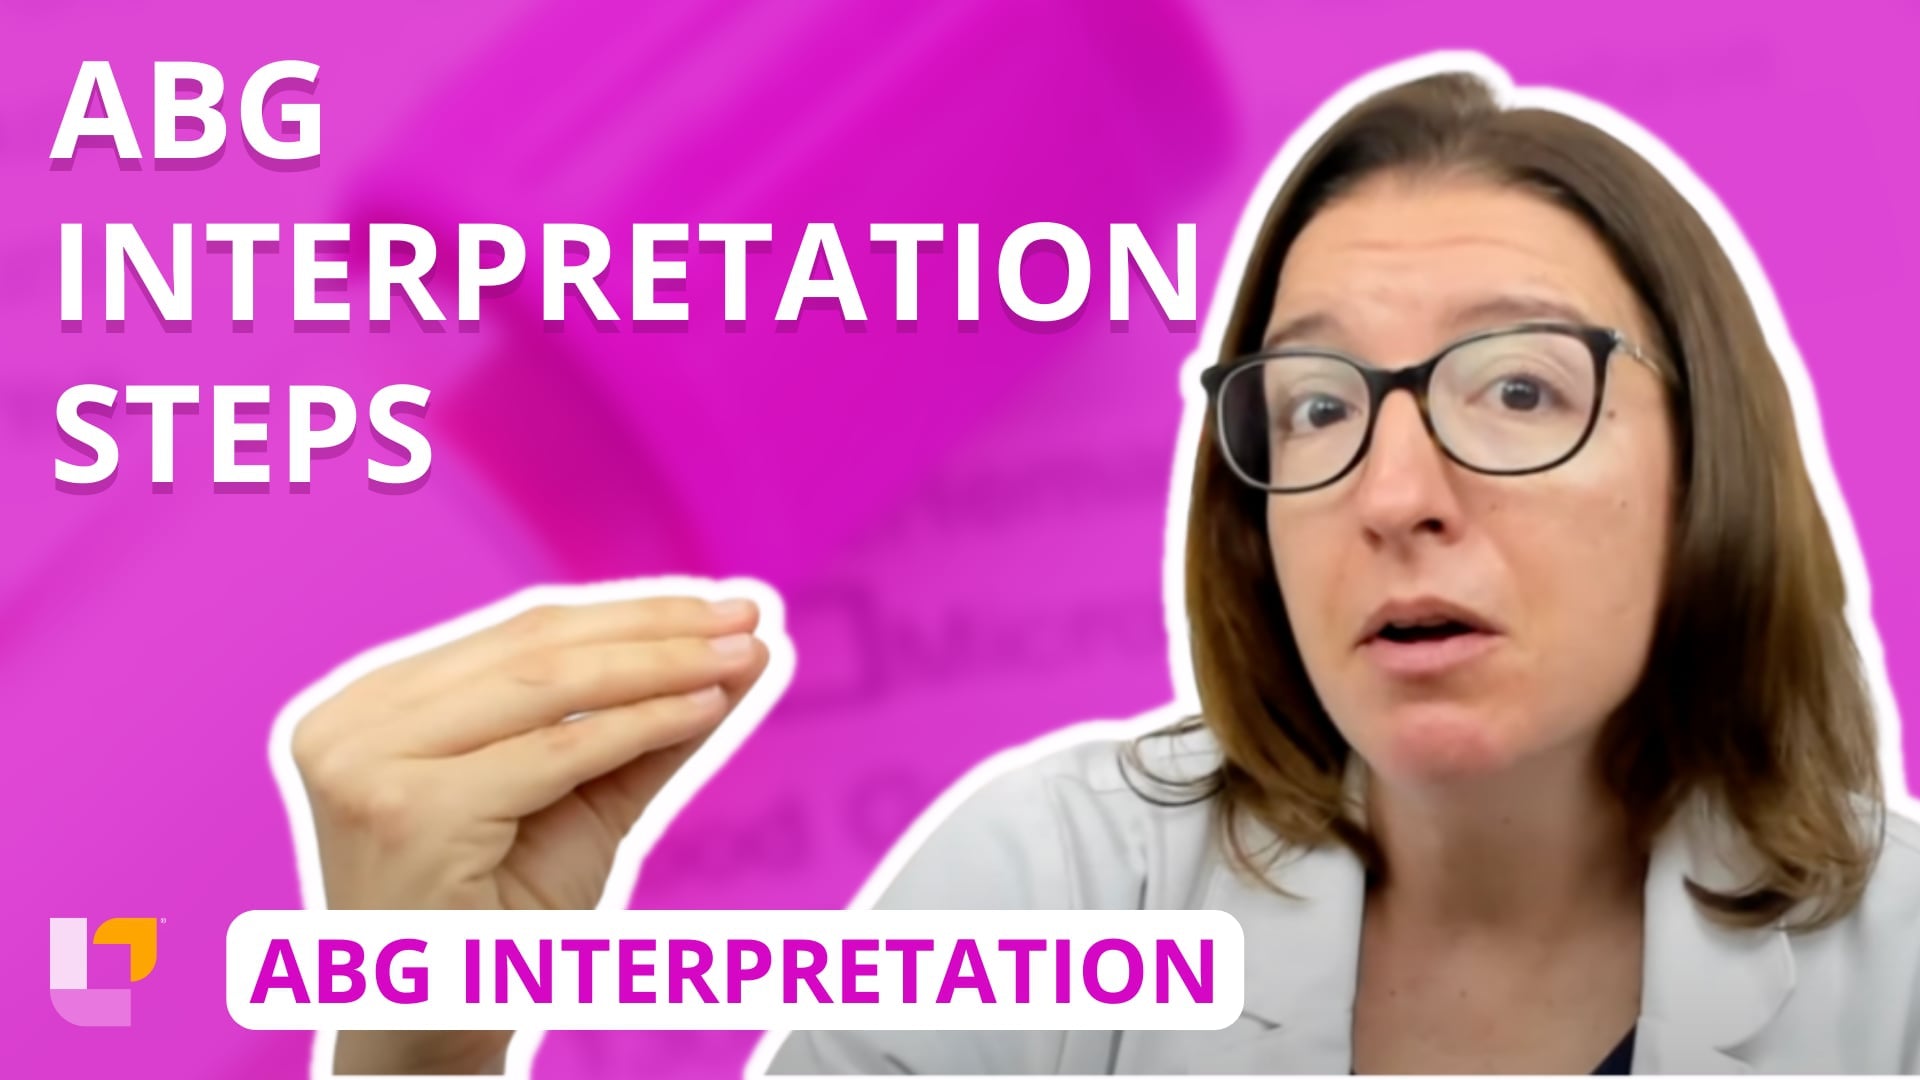 ABG Interpretation, part 3: Steps for Interpretation - LevelUpRN